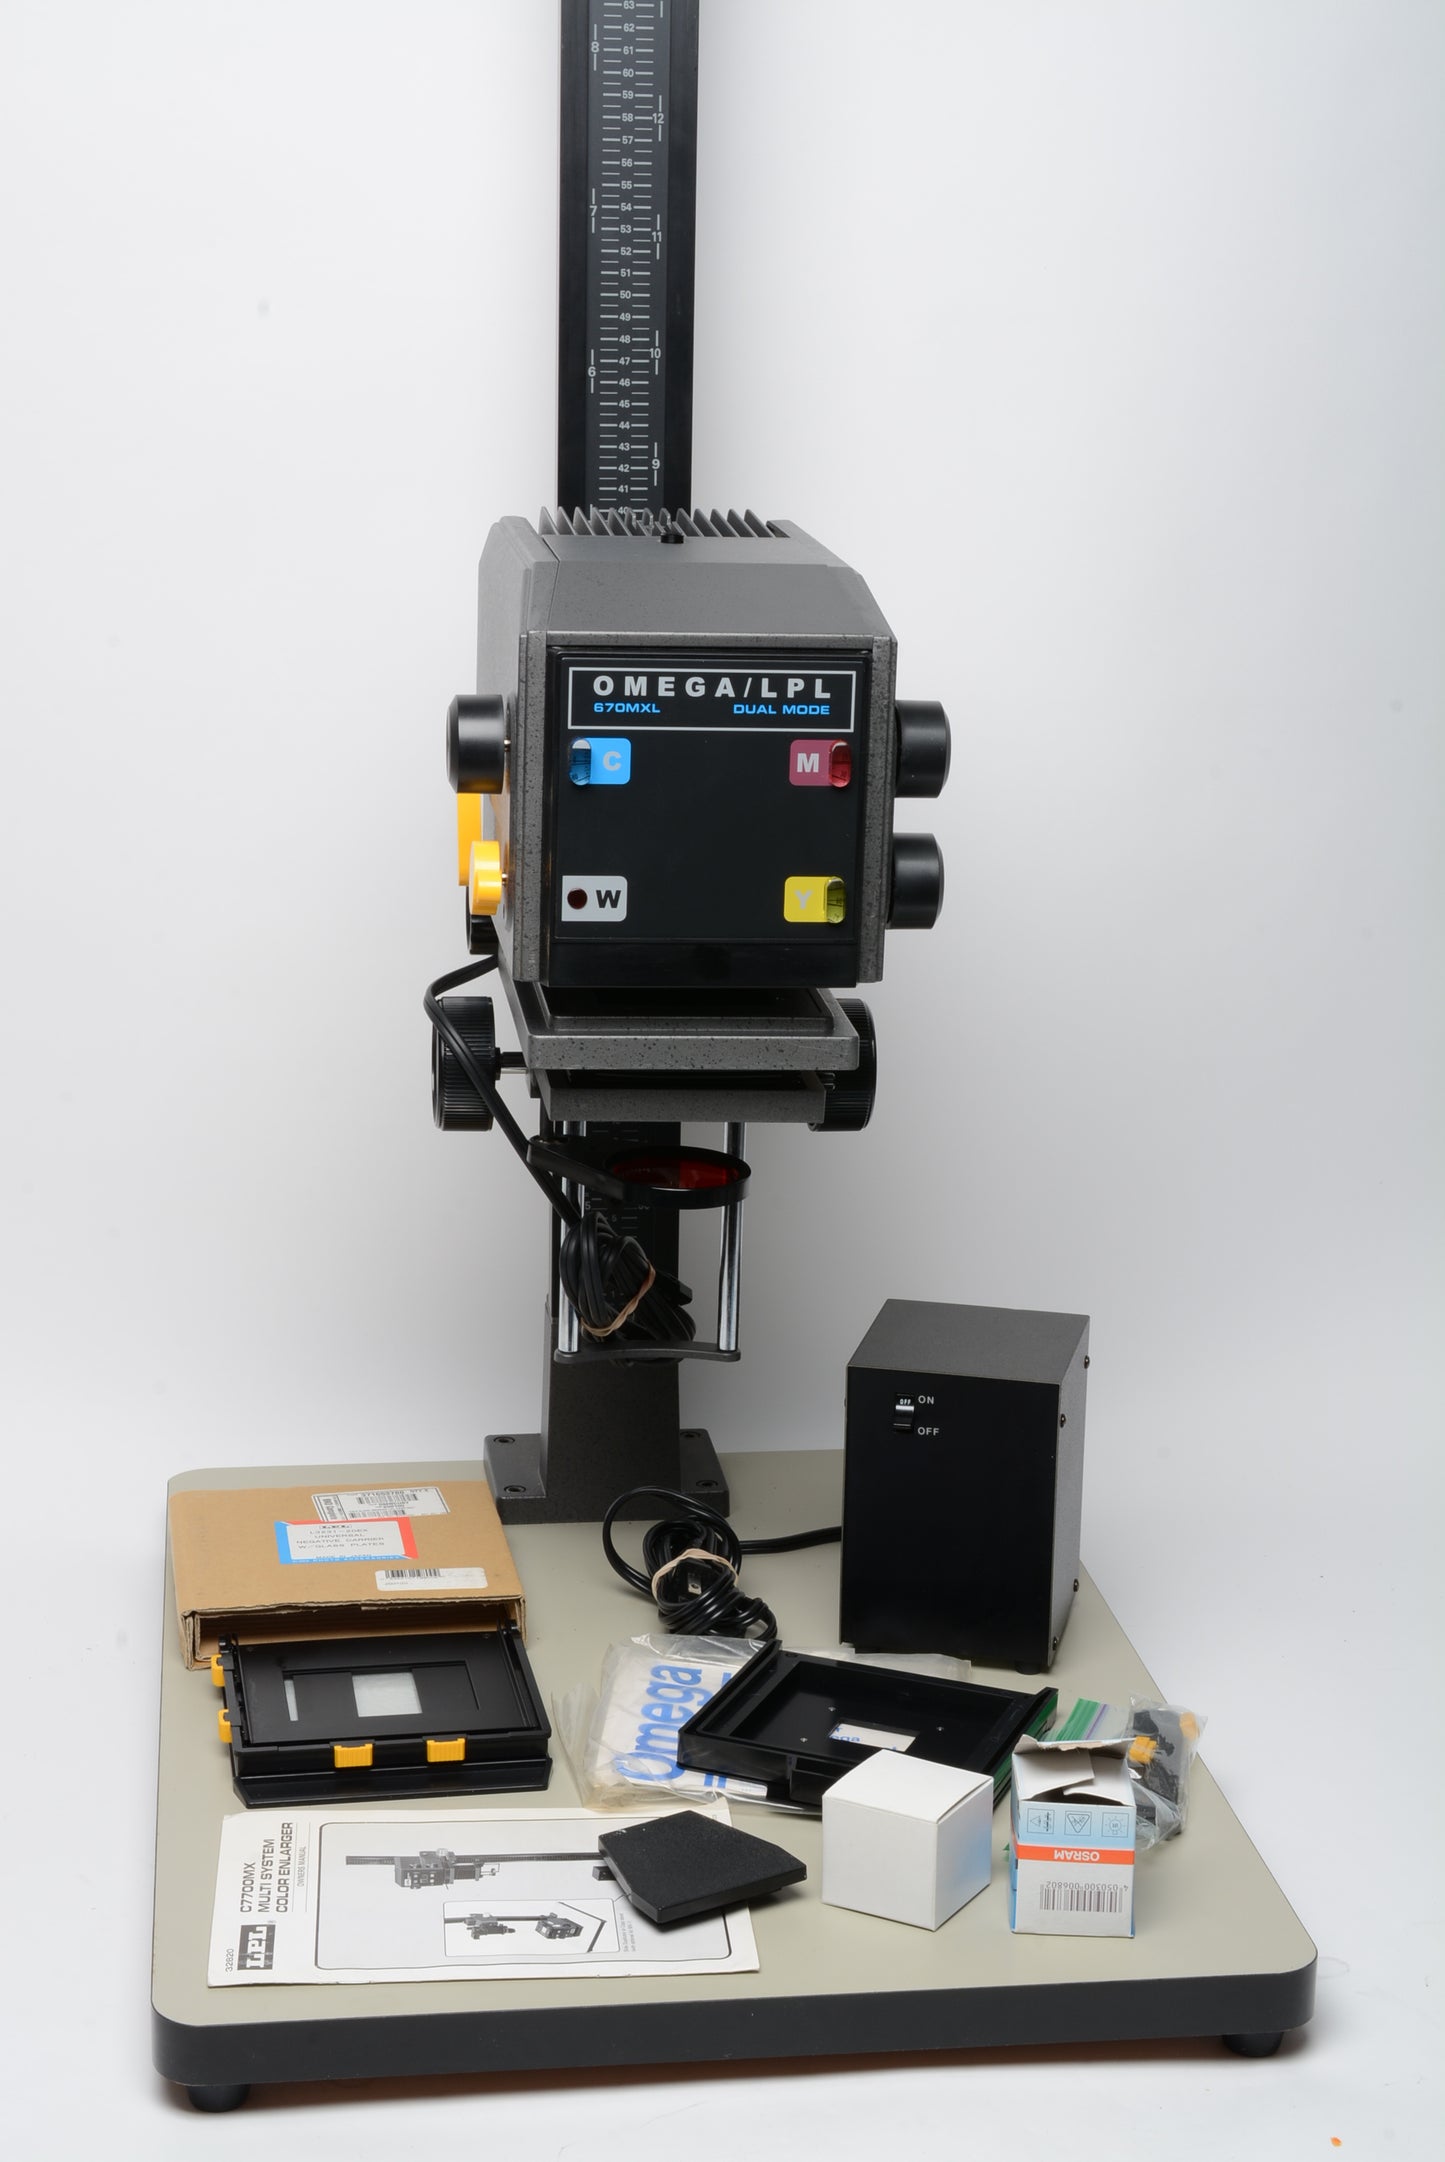 Saunders LPL Multi System C7700MX  Color & B&W Enlarger system, carrier, lens, bulbs NEW!